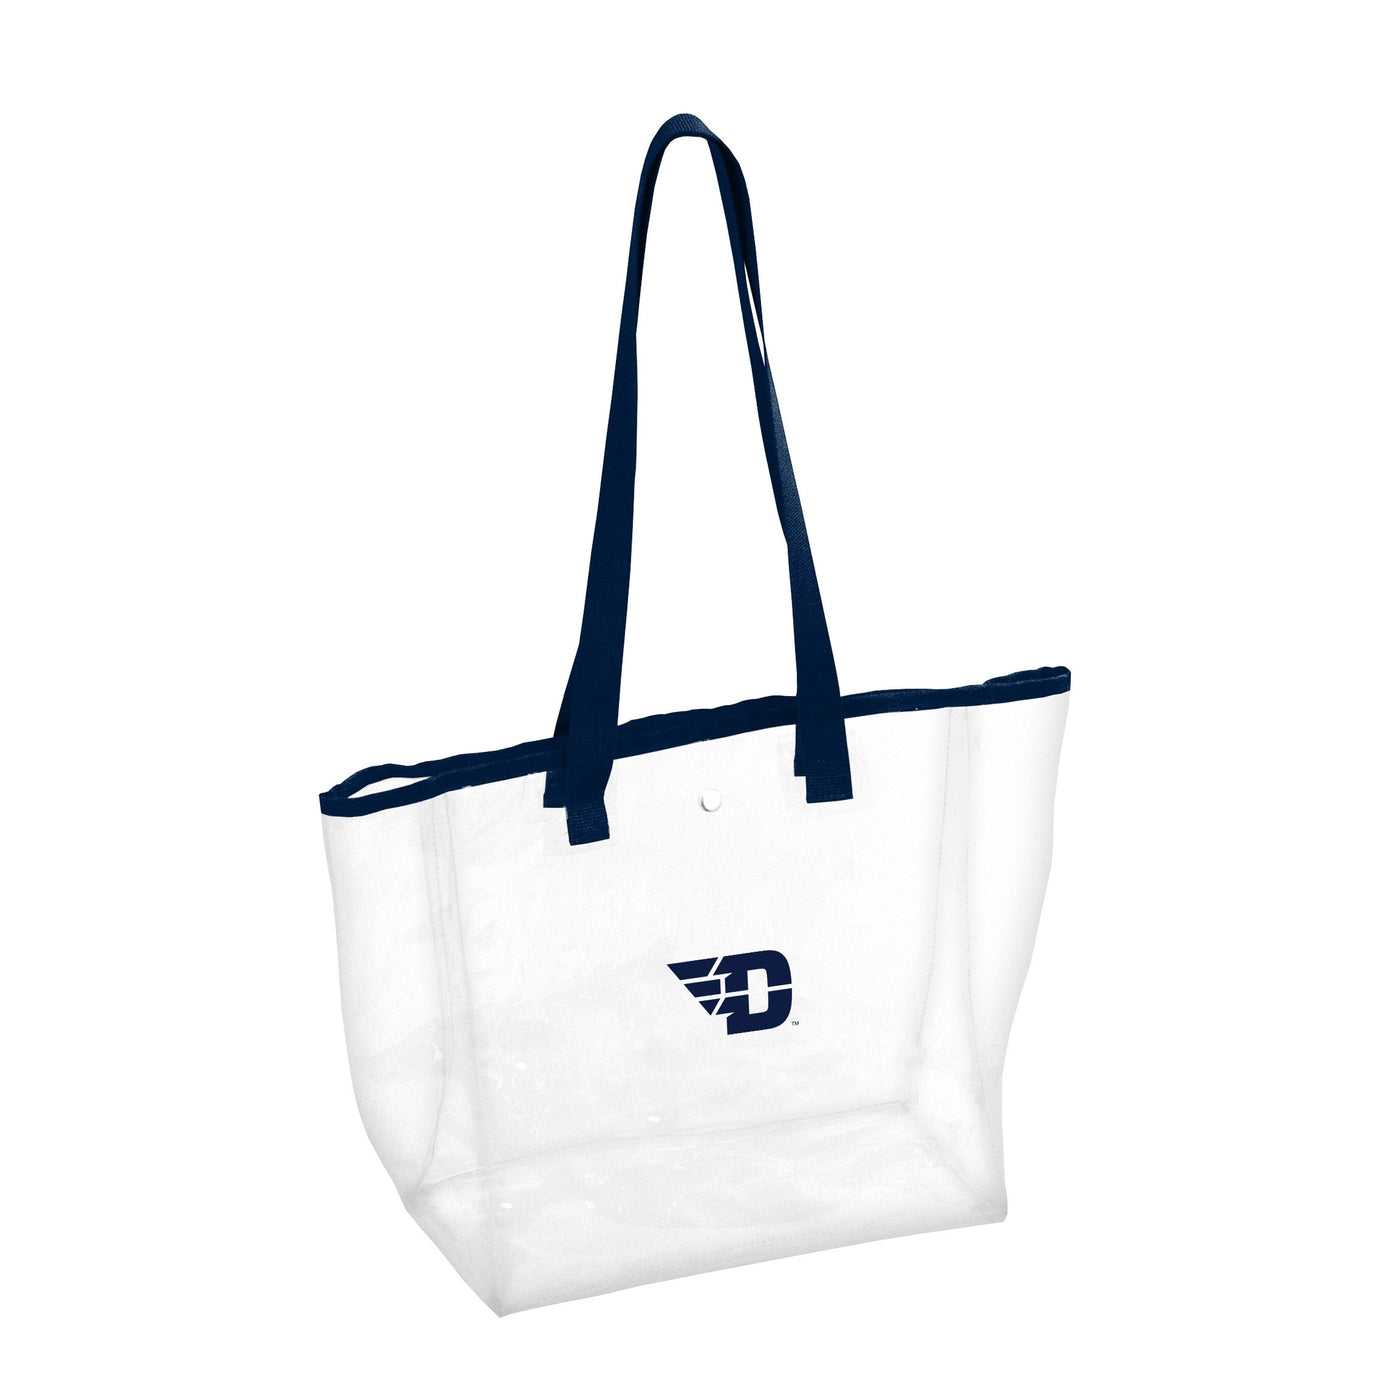 Dayton Stadium Clear Bag